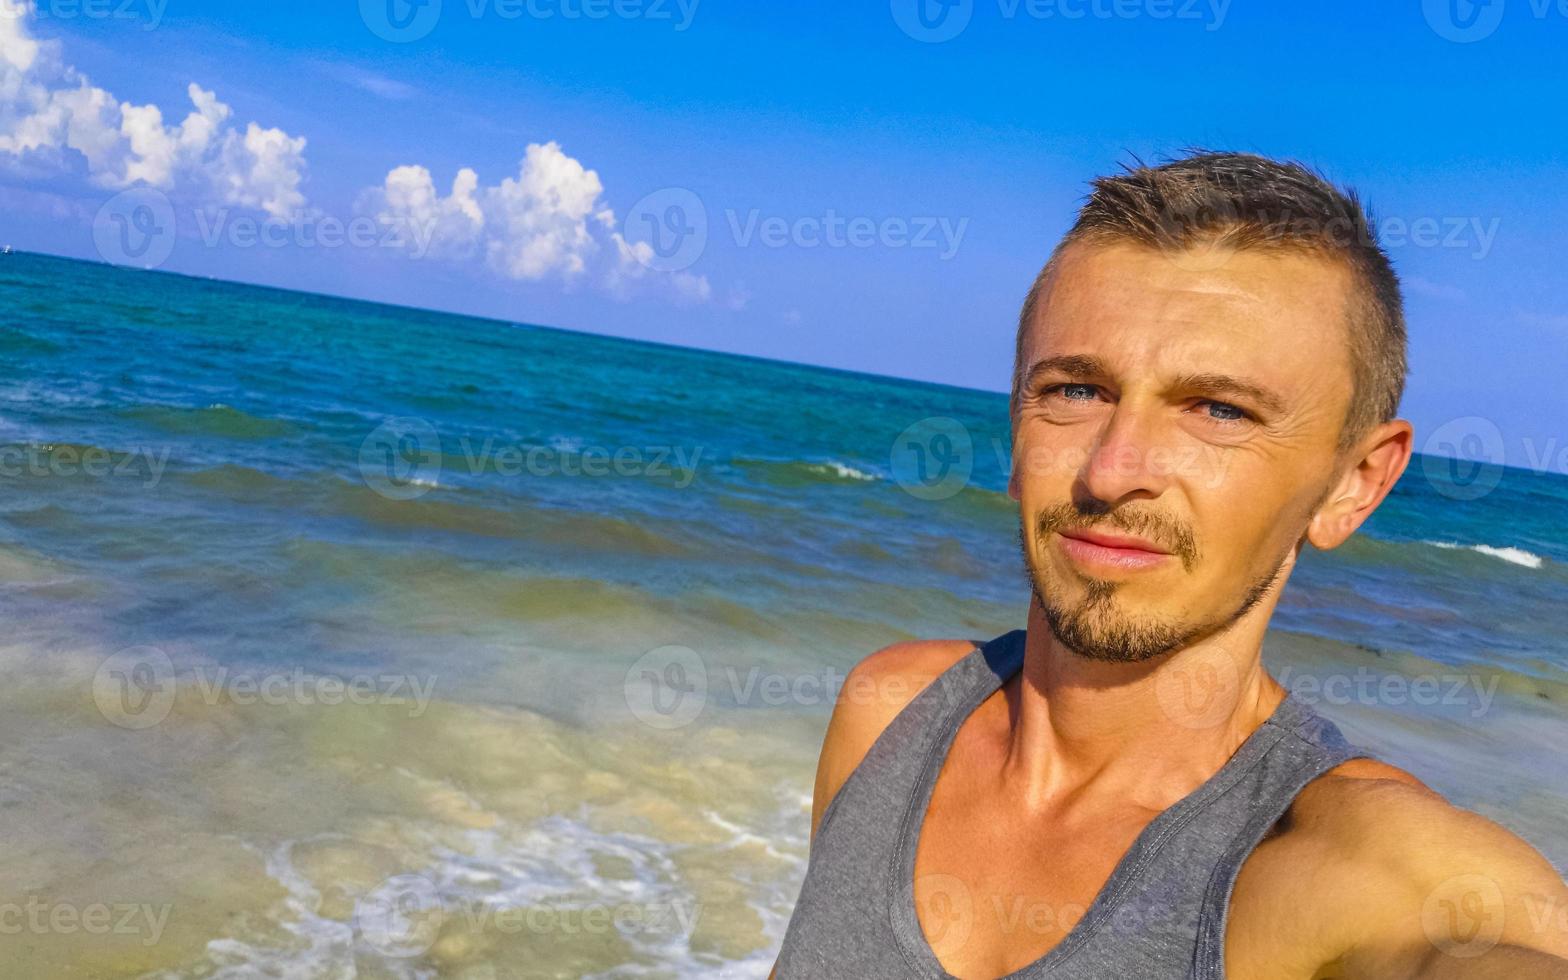 viajero turista masculino en playa tropical playa del carmen méxico. foto